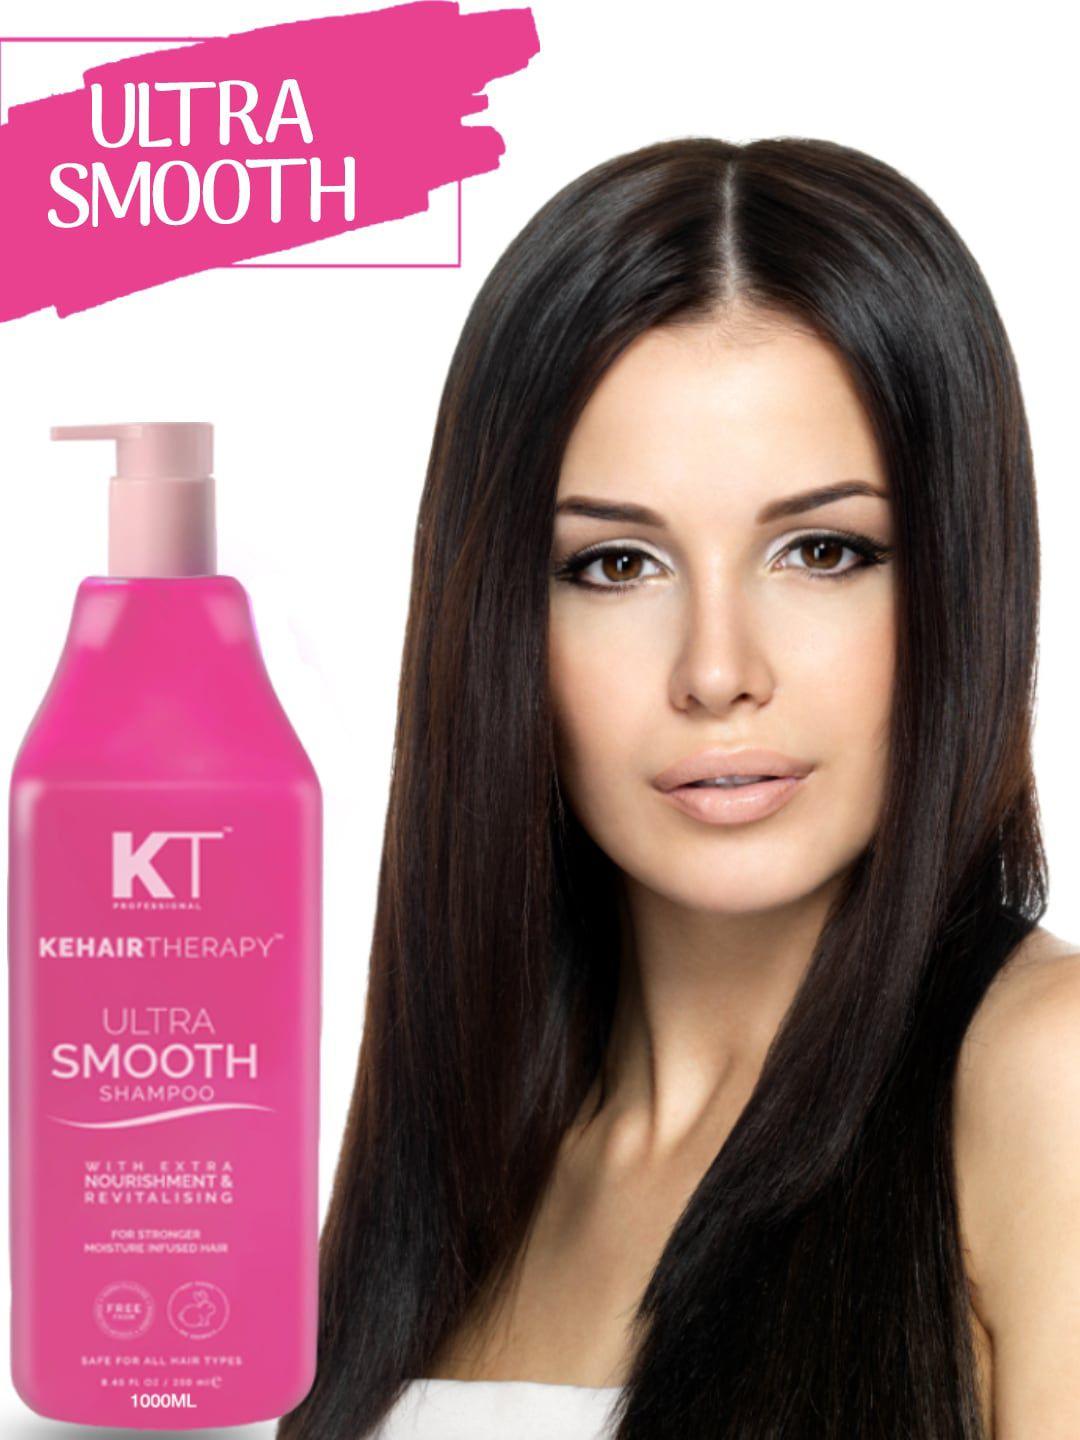 kehairtherapy ultra smooth keratin shampoo with extra nourishment & revitalizing - 1000 ml